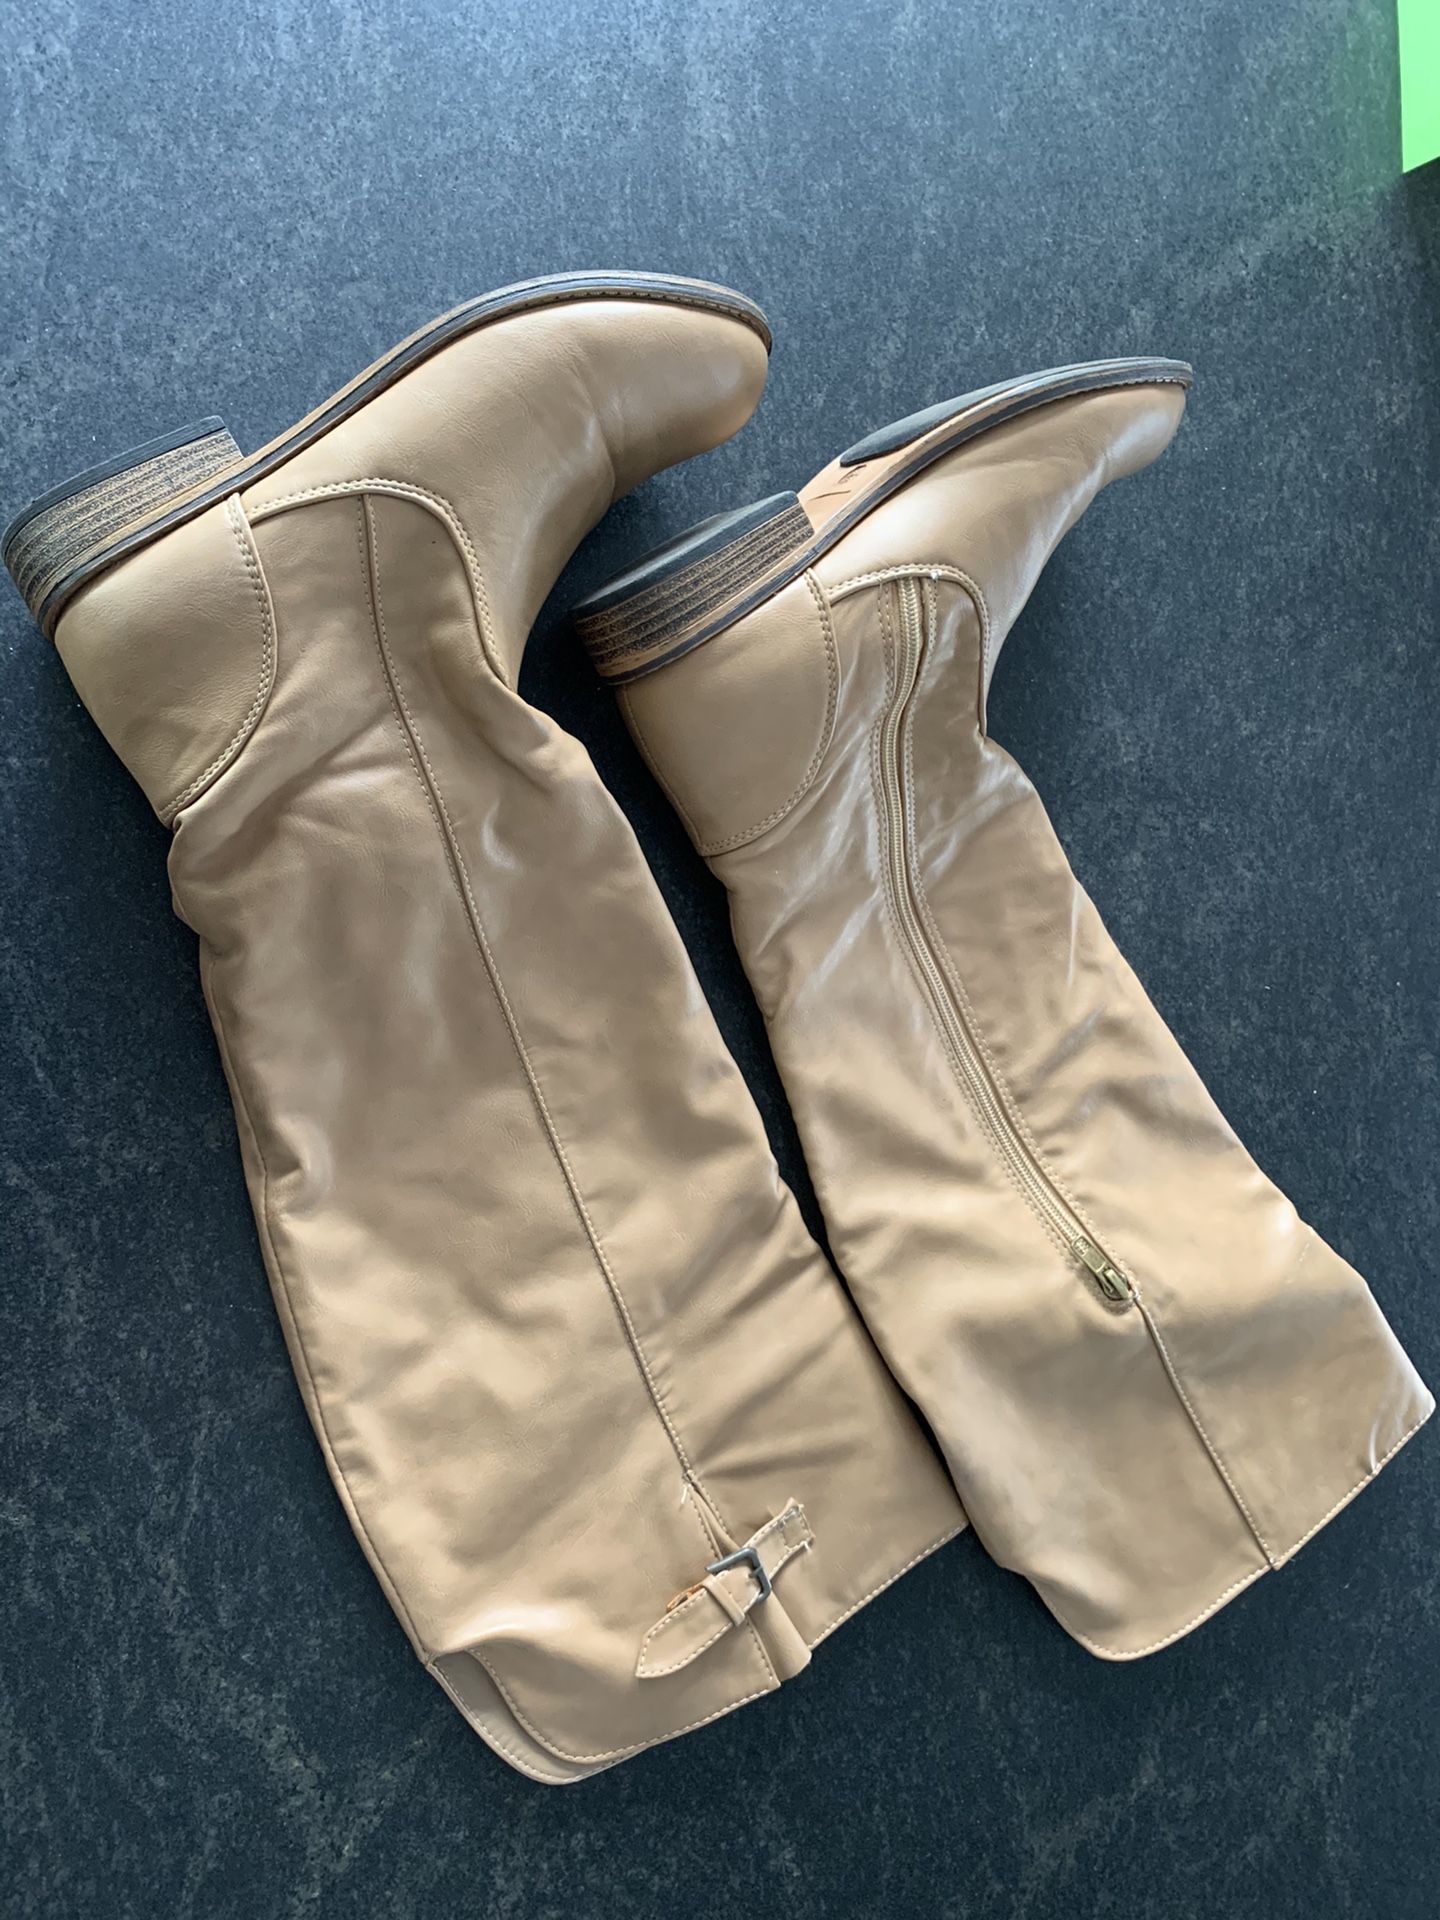 Urbanog boots, beige knee high boots, size 8/1.2